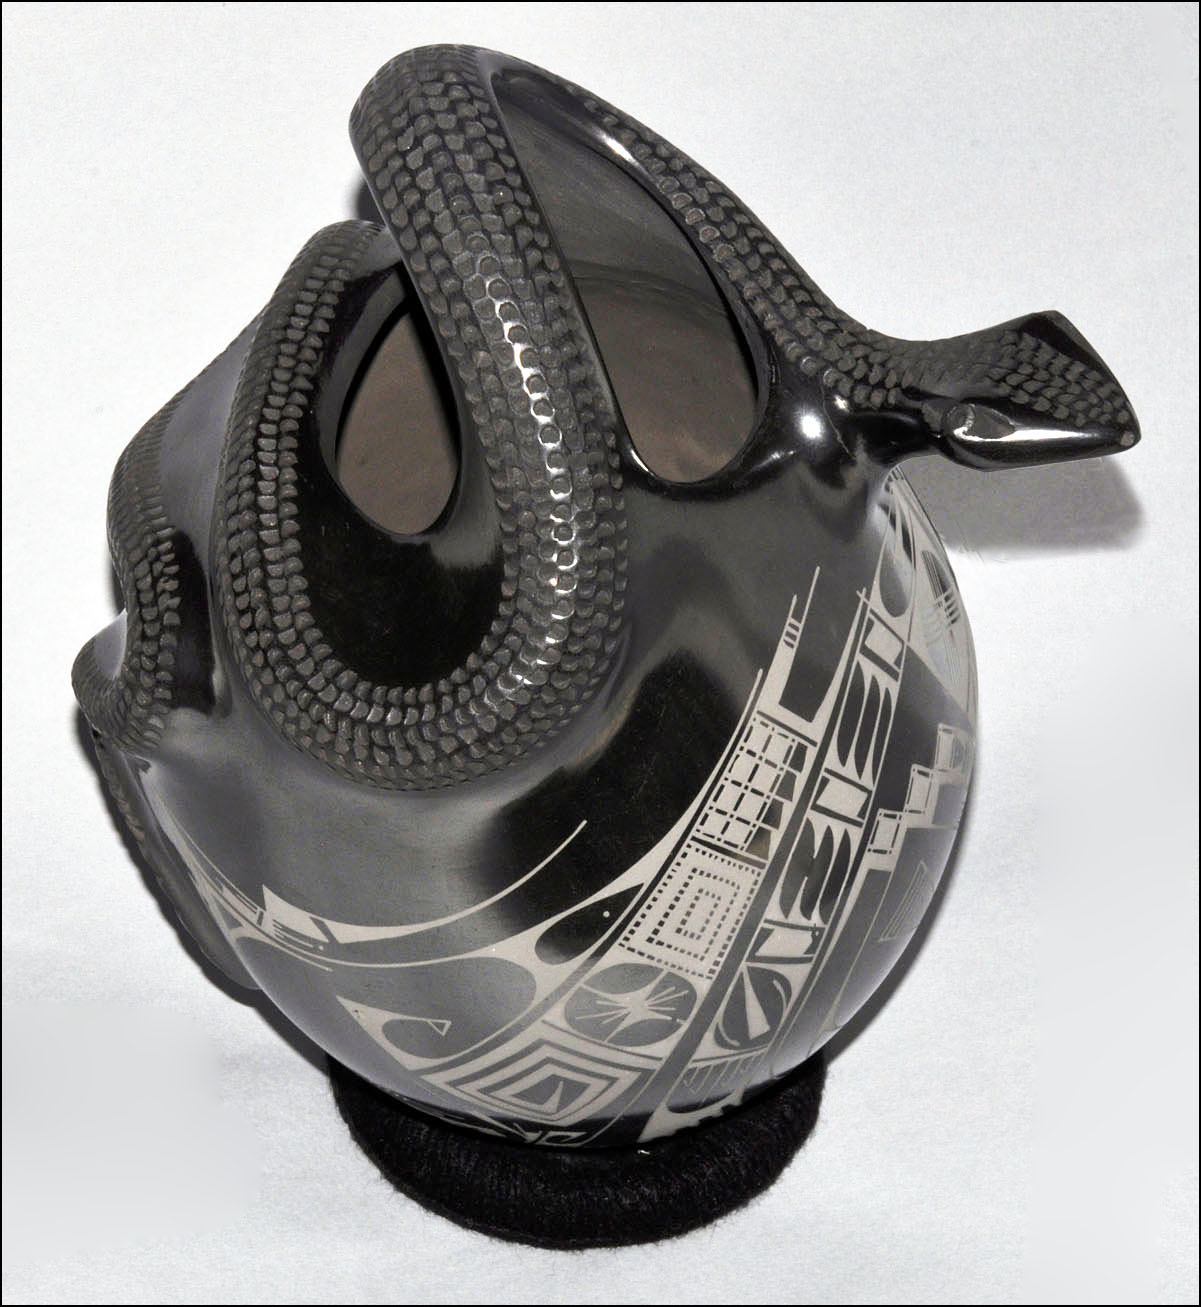 Wilford's Buying Journal: Black Snake Pot from Mata Ortiz